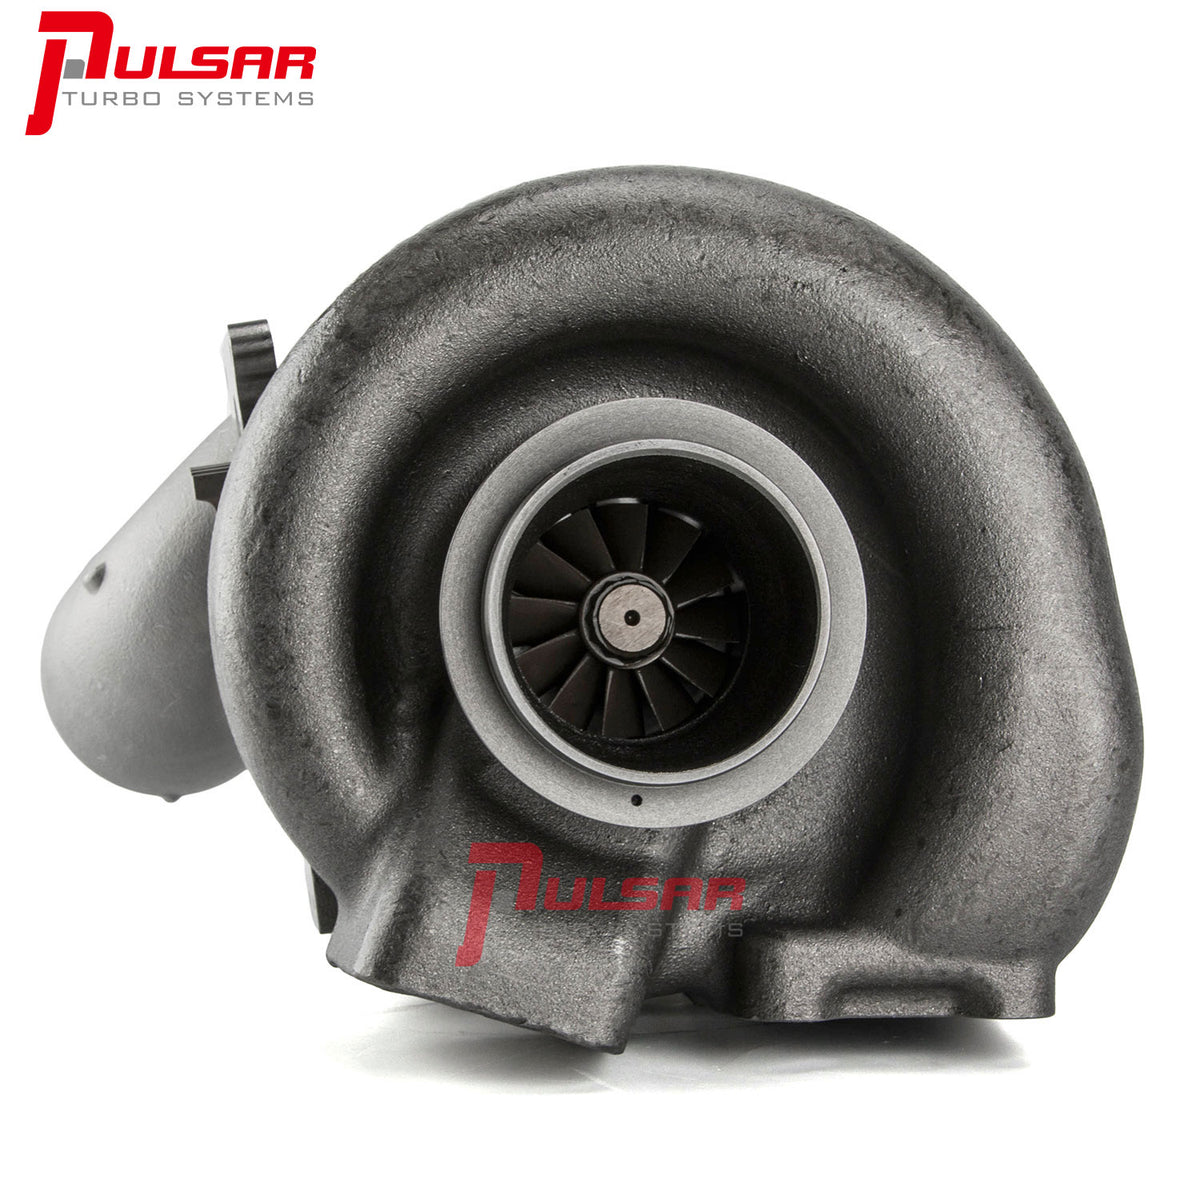 Pulsar Turbo Turbocharger for Caterpillar C13 Acert 12.5L GTA4088BS 75